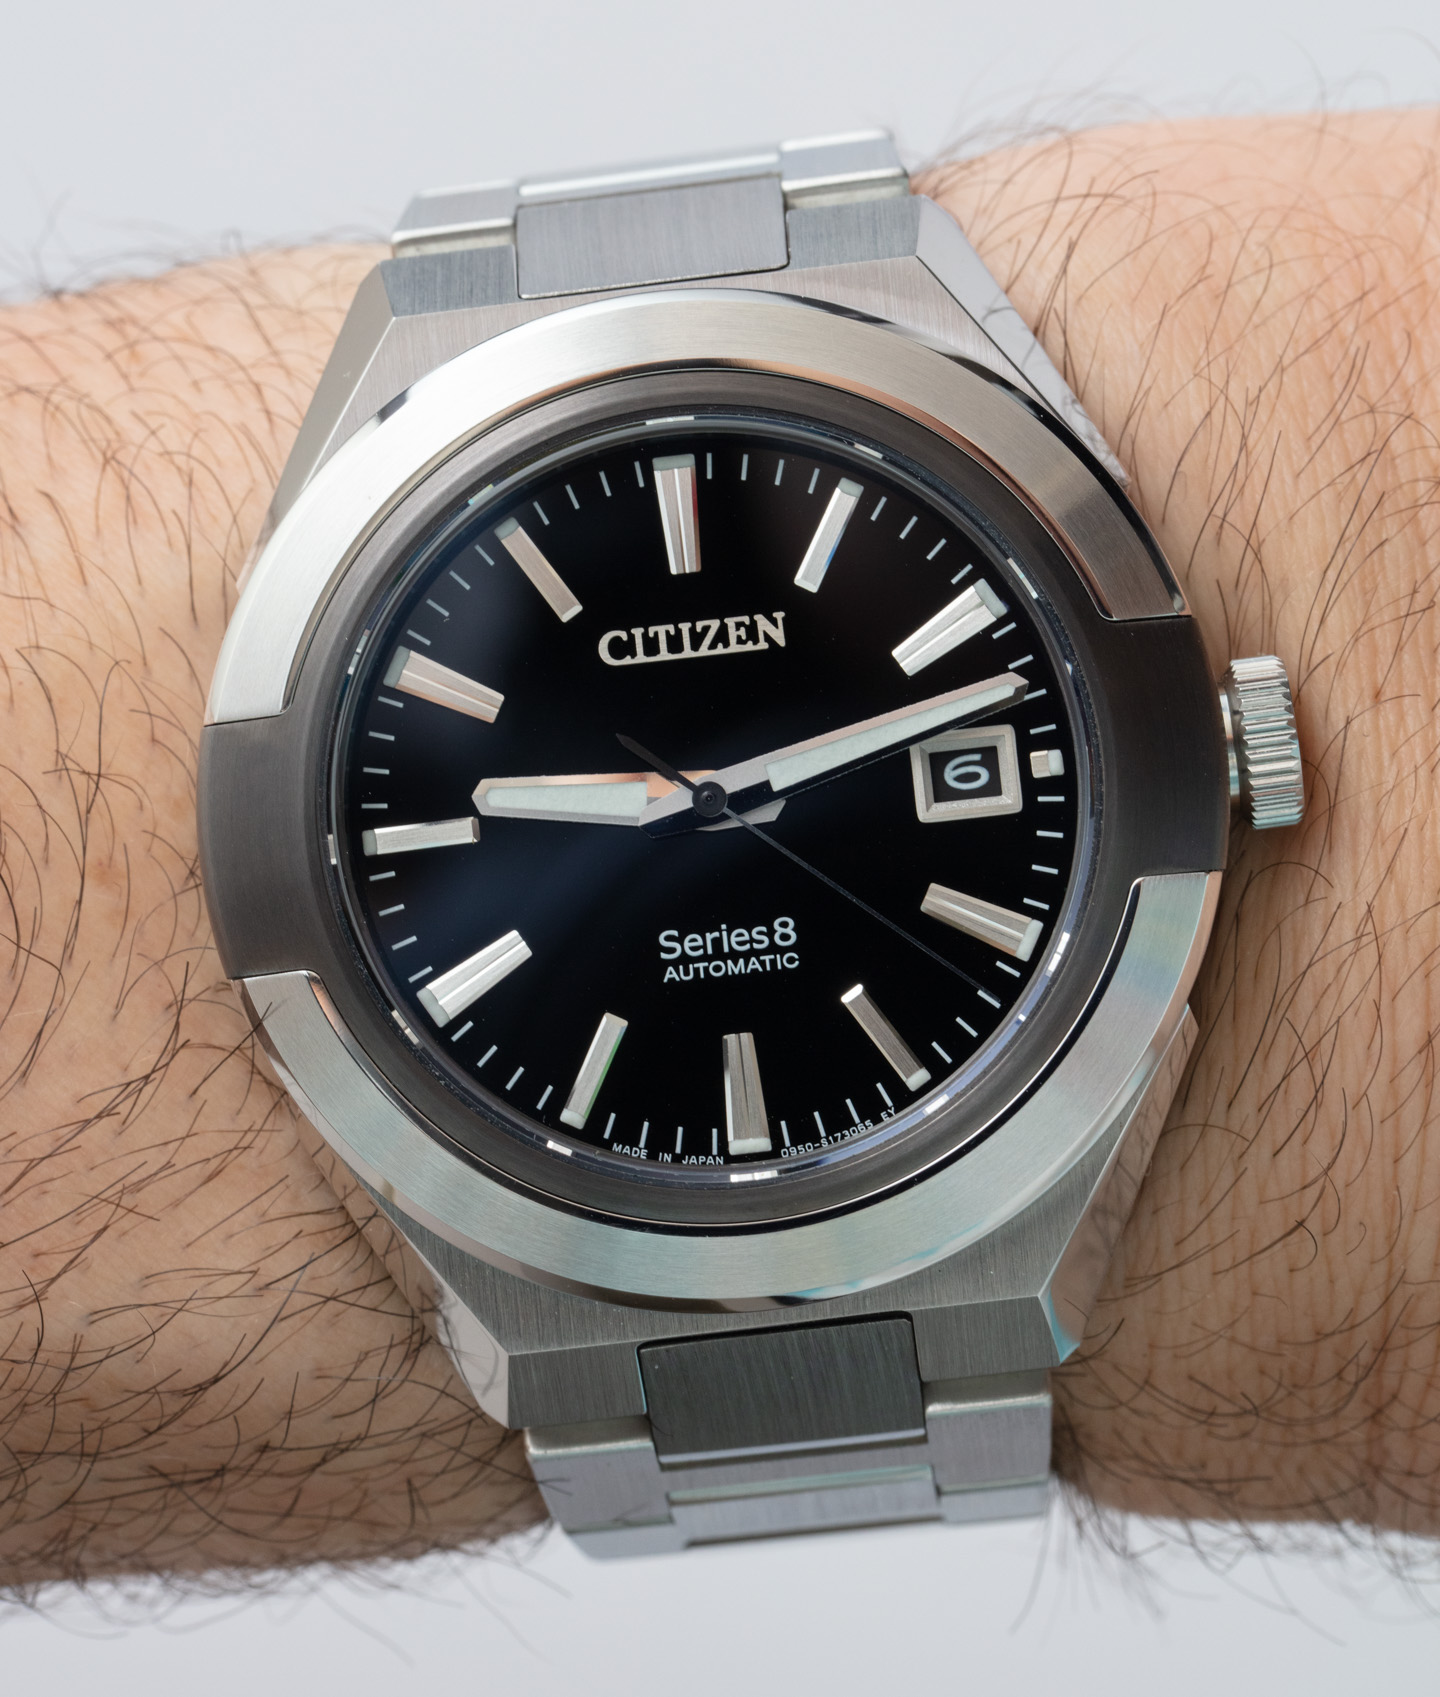 Watch Review: Citizen Series 8 870 Automatic | aBlogtoWatch